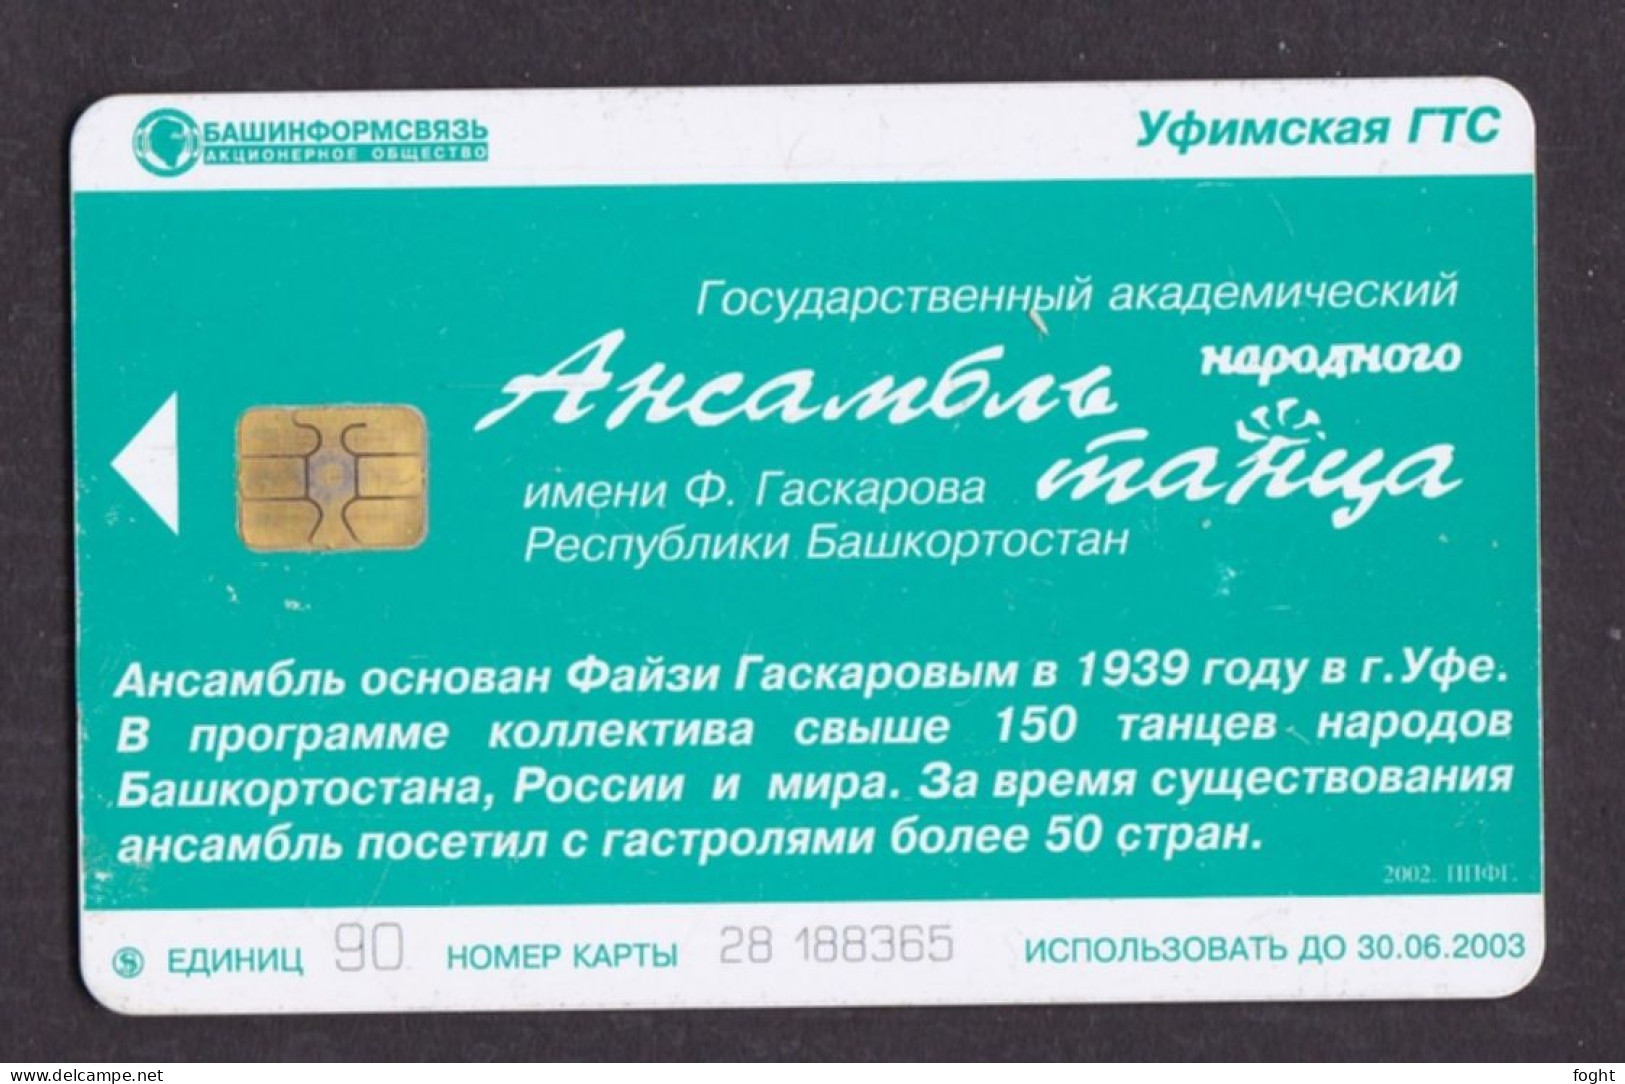 2002 Russia Bashinformsvyaz-Ufa,Tatar Dance "Bridegroom",90 Units Card,Col:RU-BIS-V-006 - Rusia